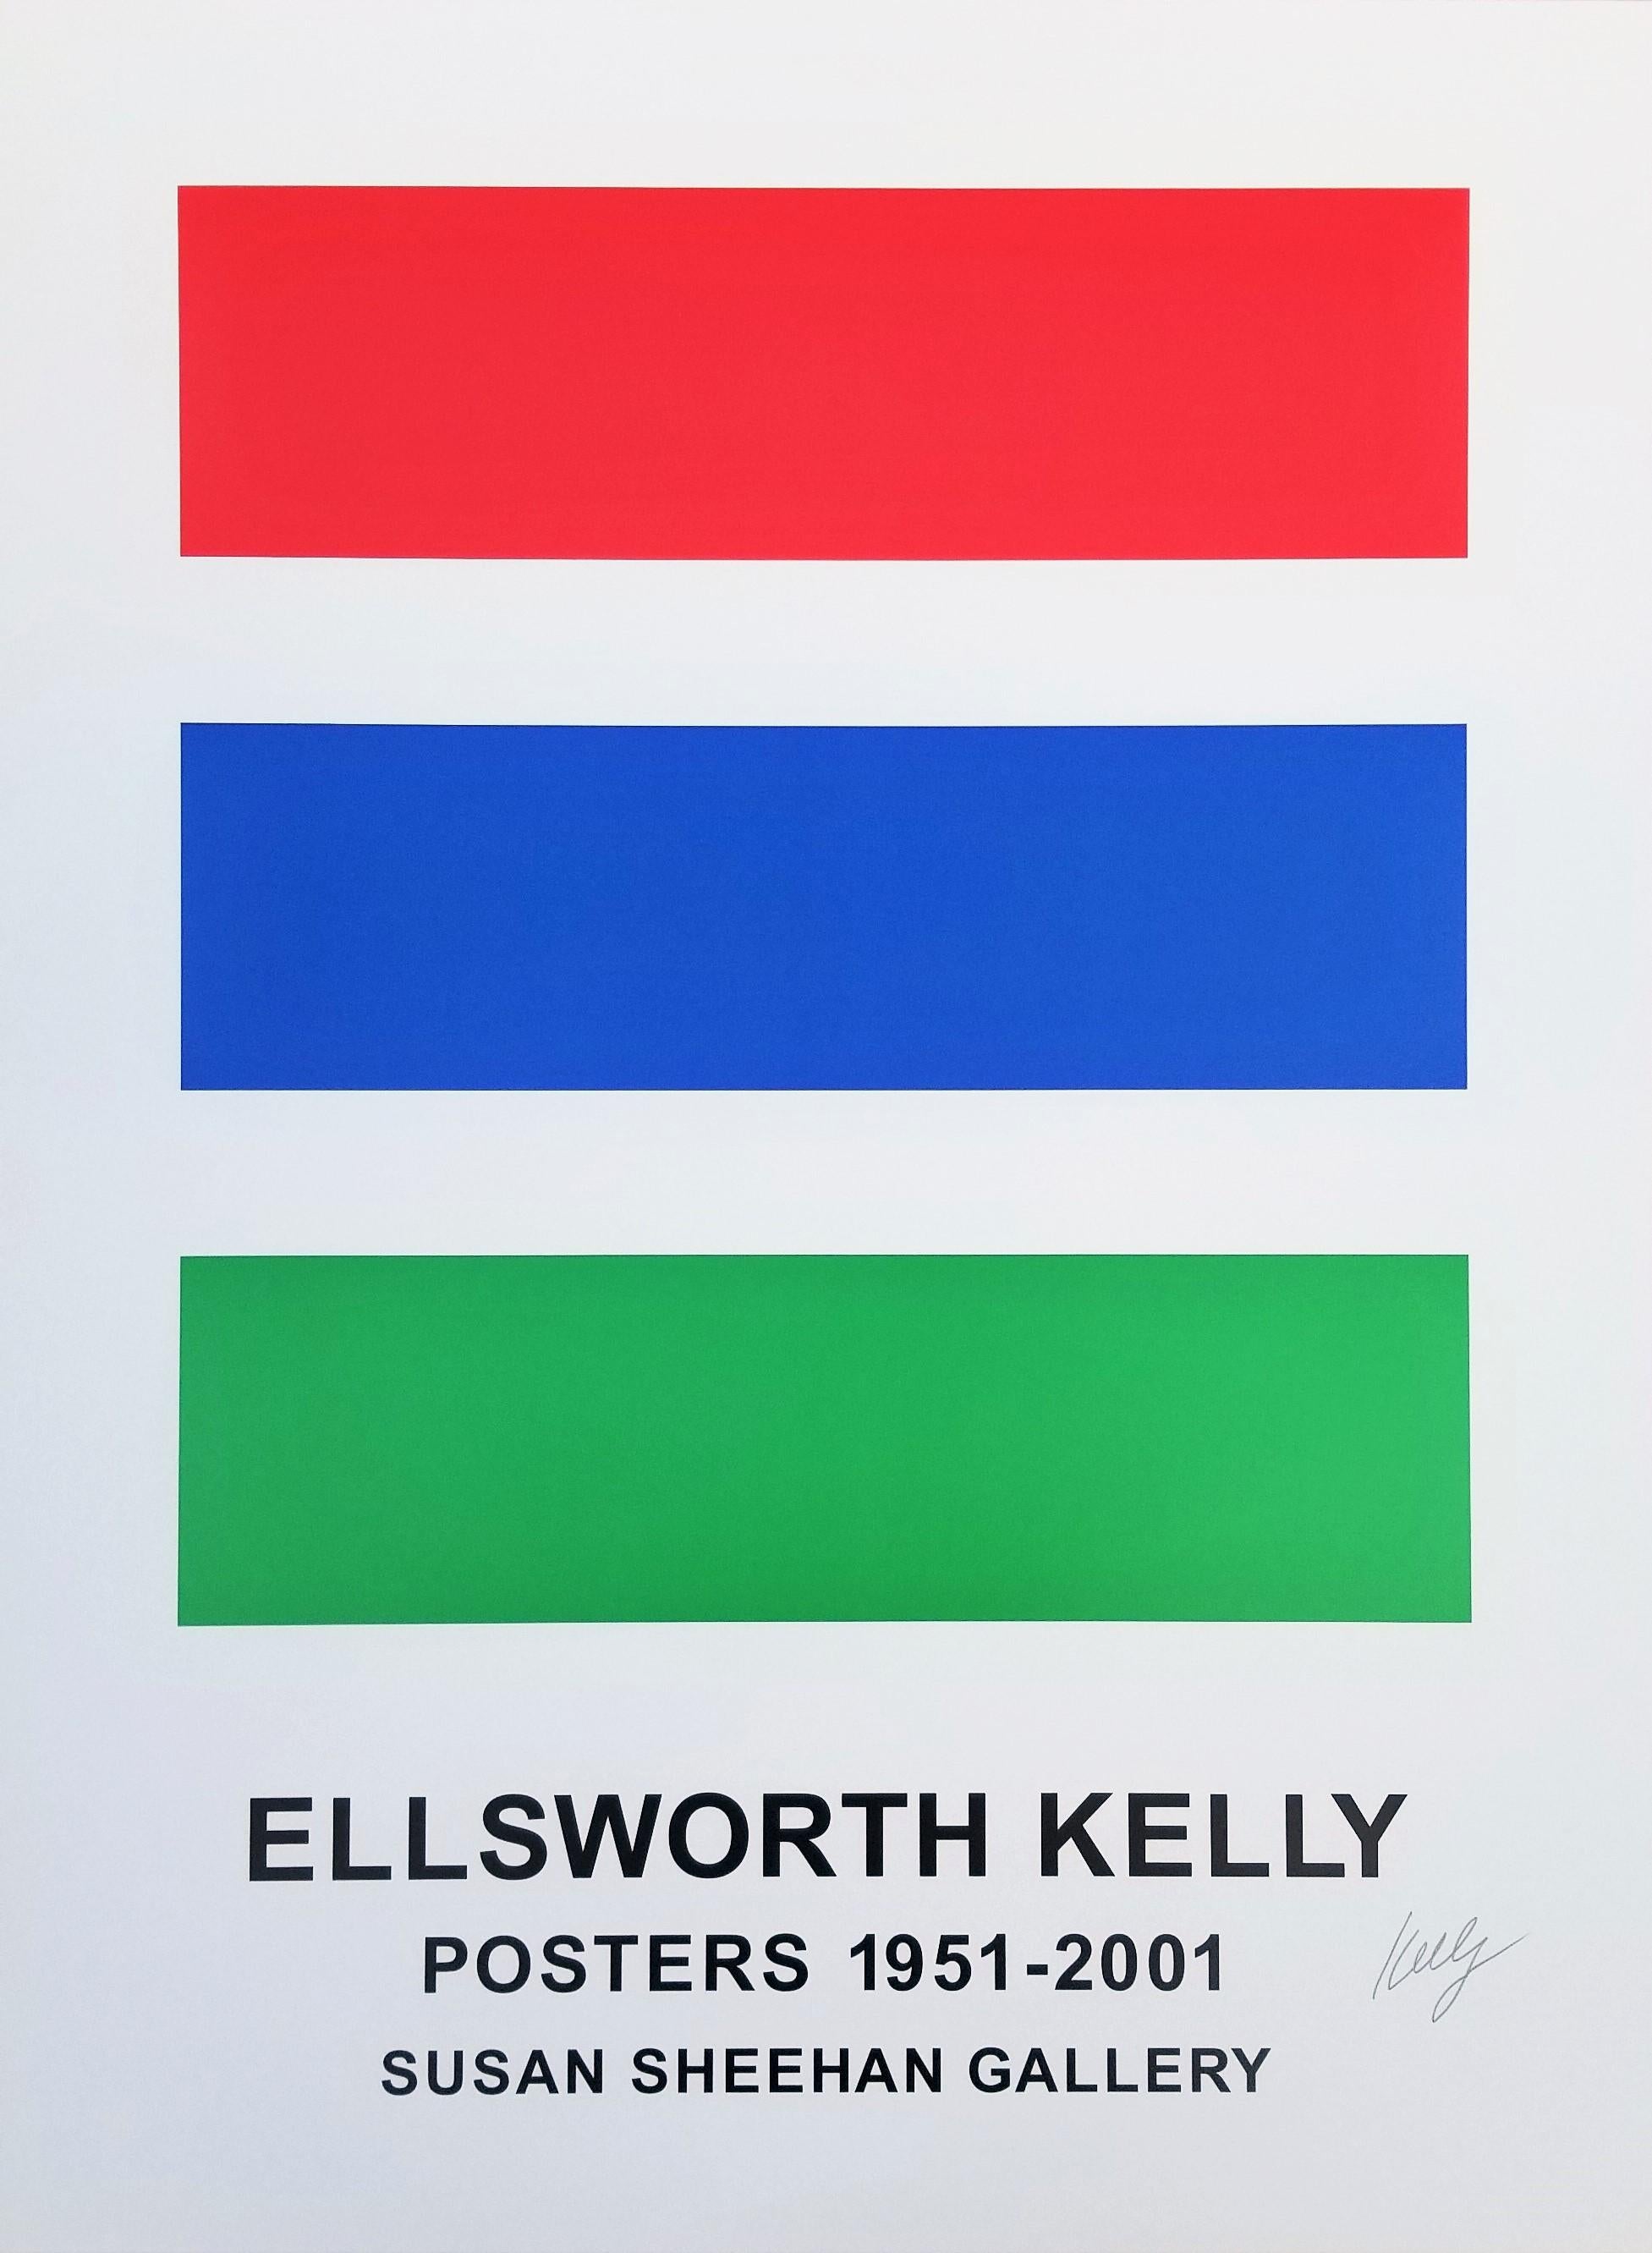 What kind of art did Ellsworth Kelly make?